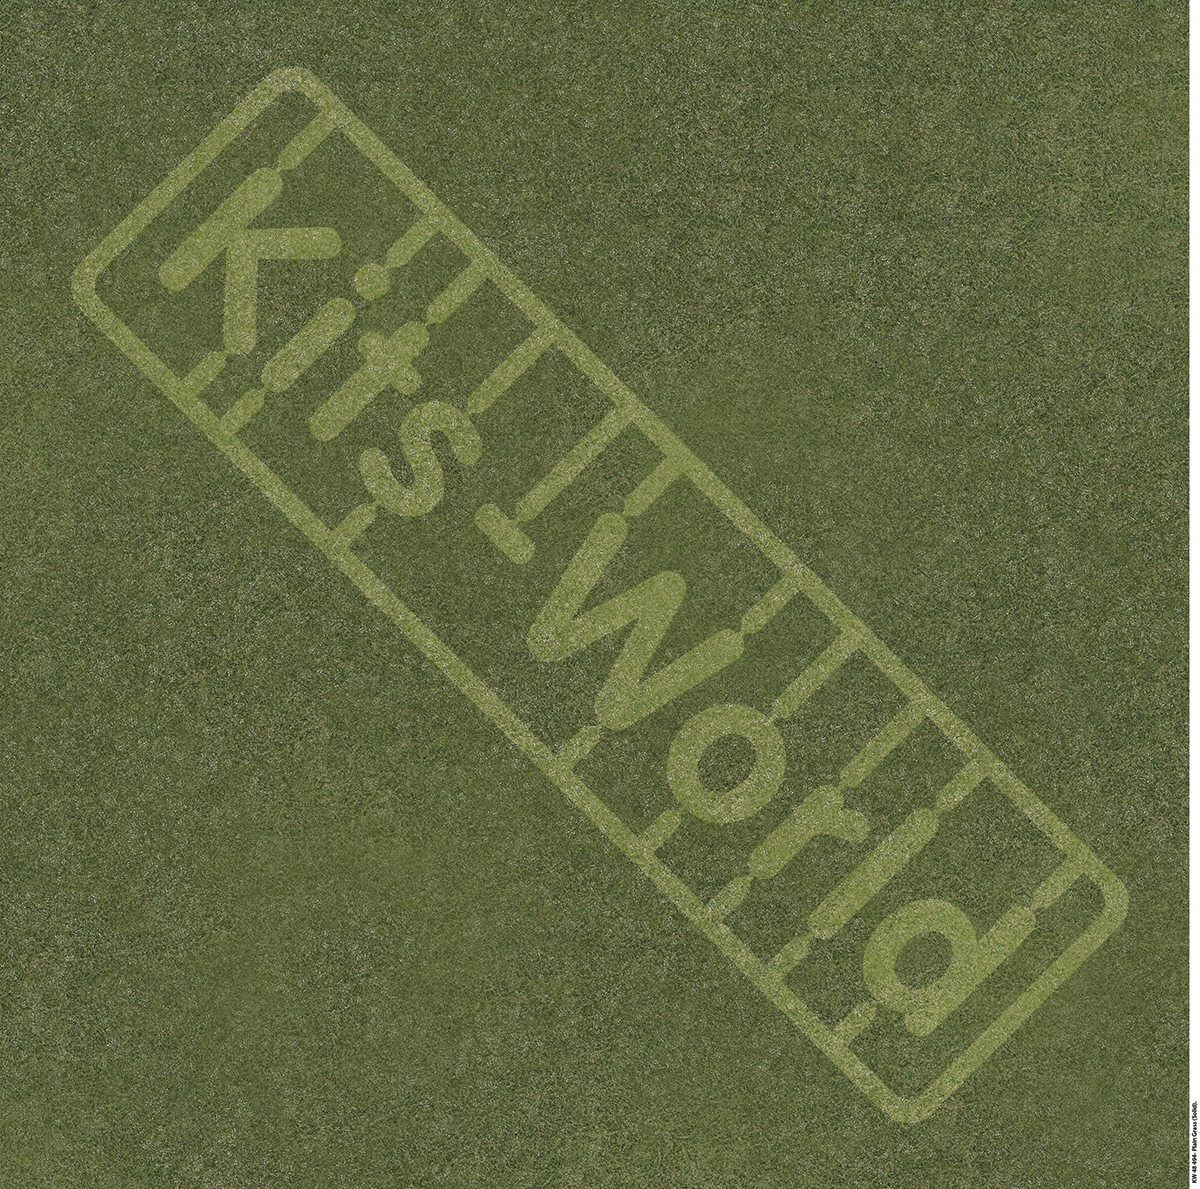 Kitsworld Diorama Adhesive Base 1:48th scale - Plain Grass Solid KWB 48-494 Plain Grass Solid 